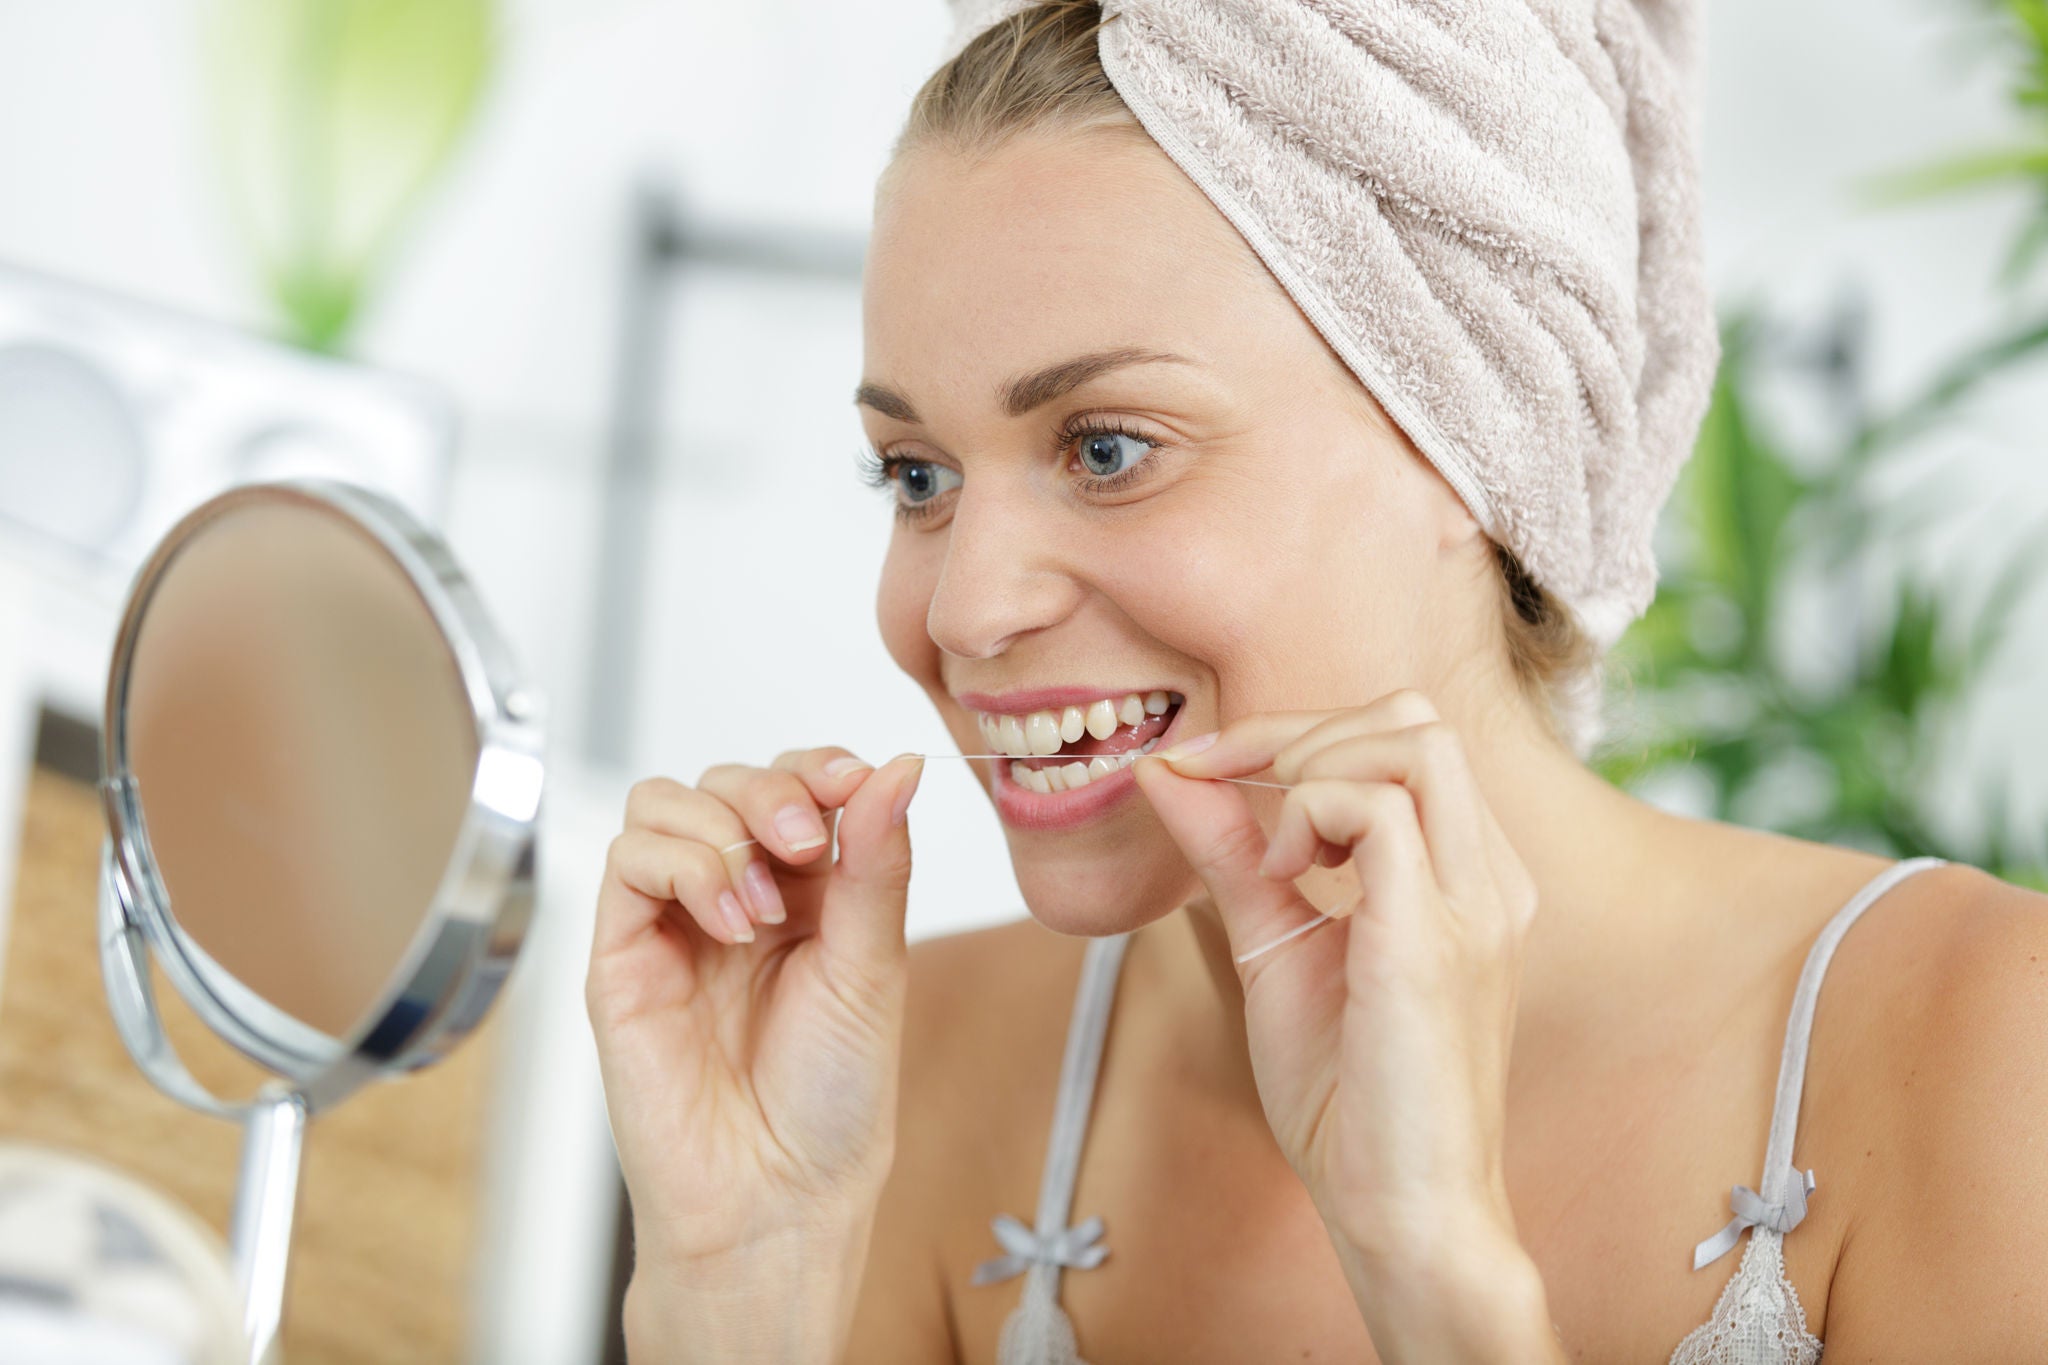 woman cleaning her teeth using dental floss